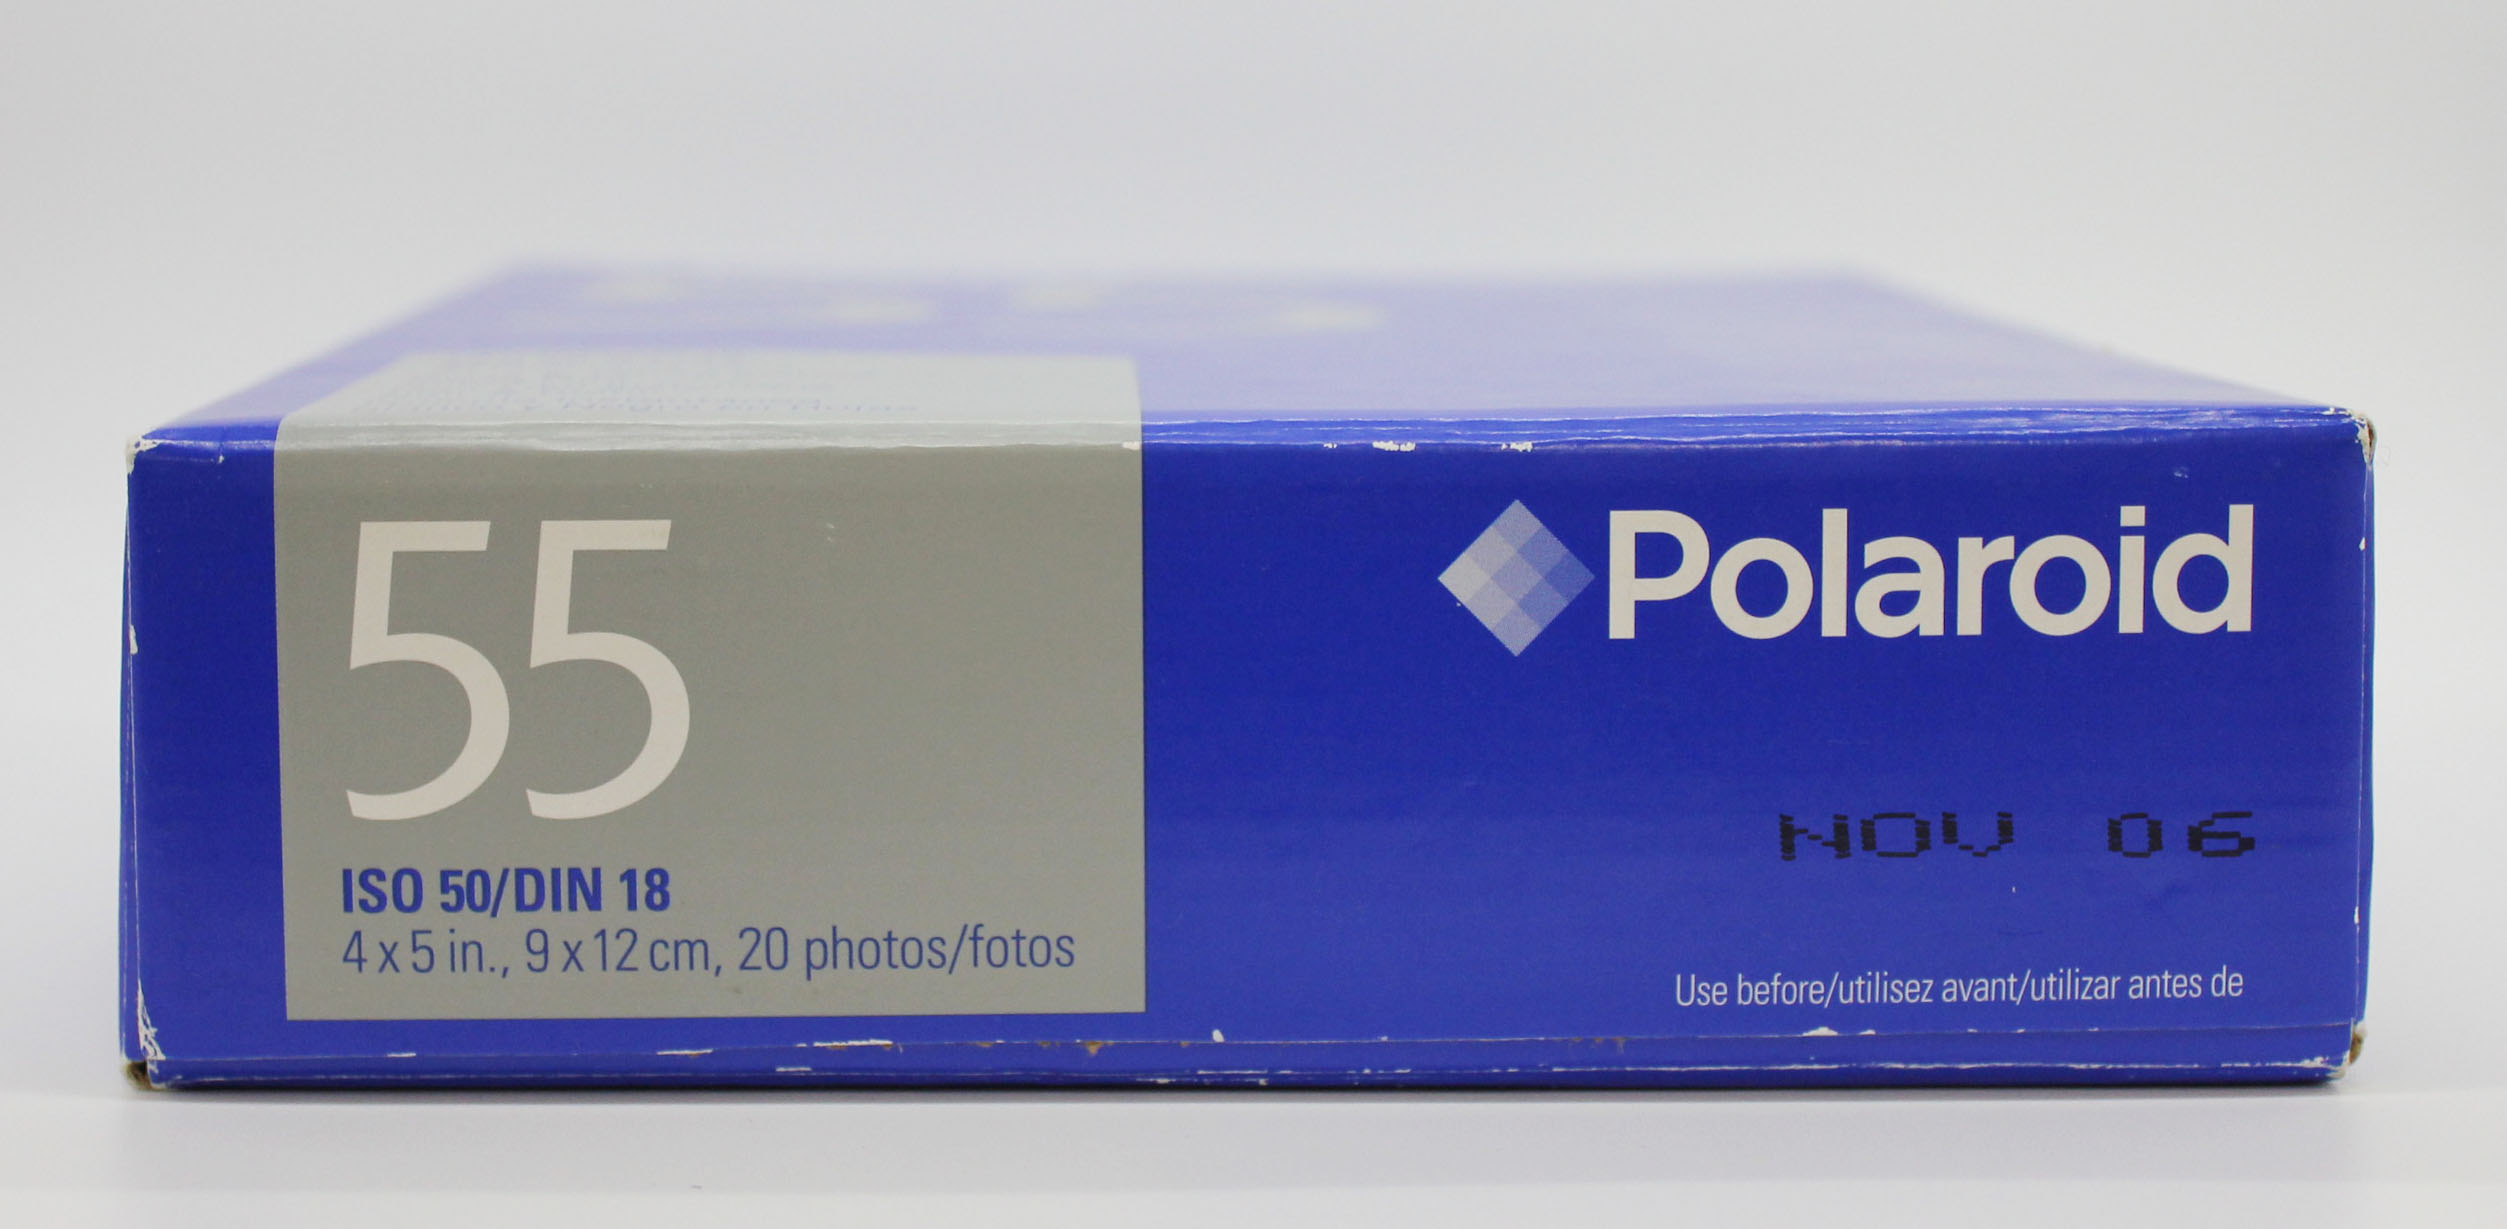  Polaroid 55 4x5in. 9x12cm B&W Black & White Instant Sheet Film 20photos Expired 11/06 from Japan Photo 3